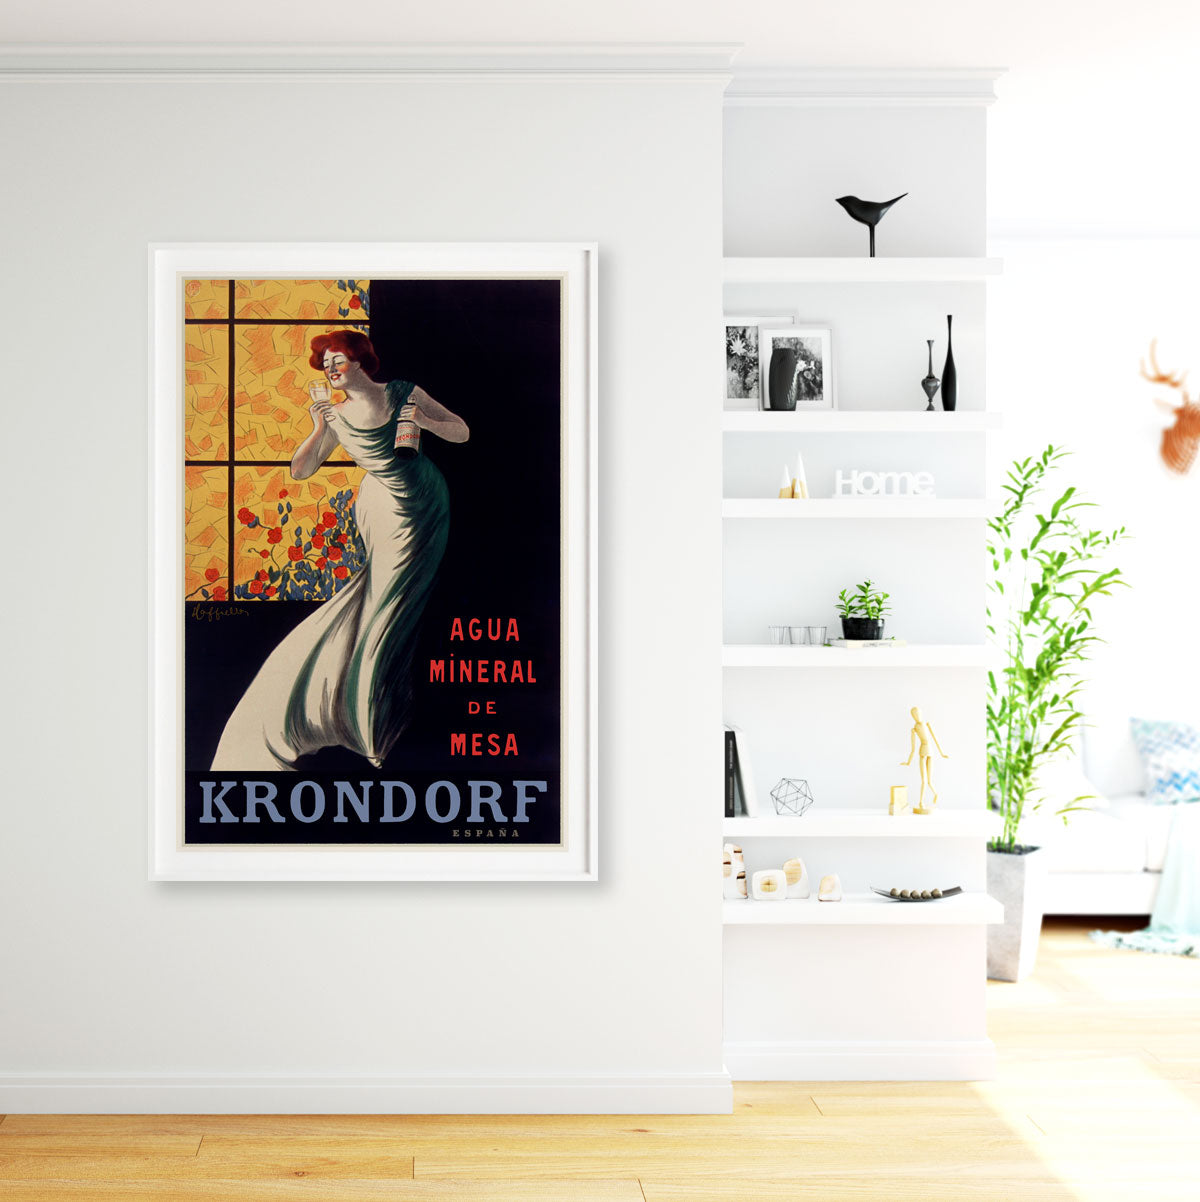 Krondorf retro vintage advertising print from Places We Luv